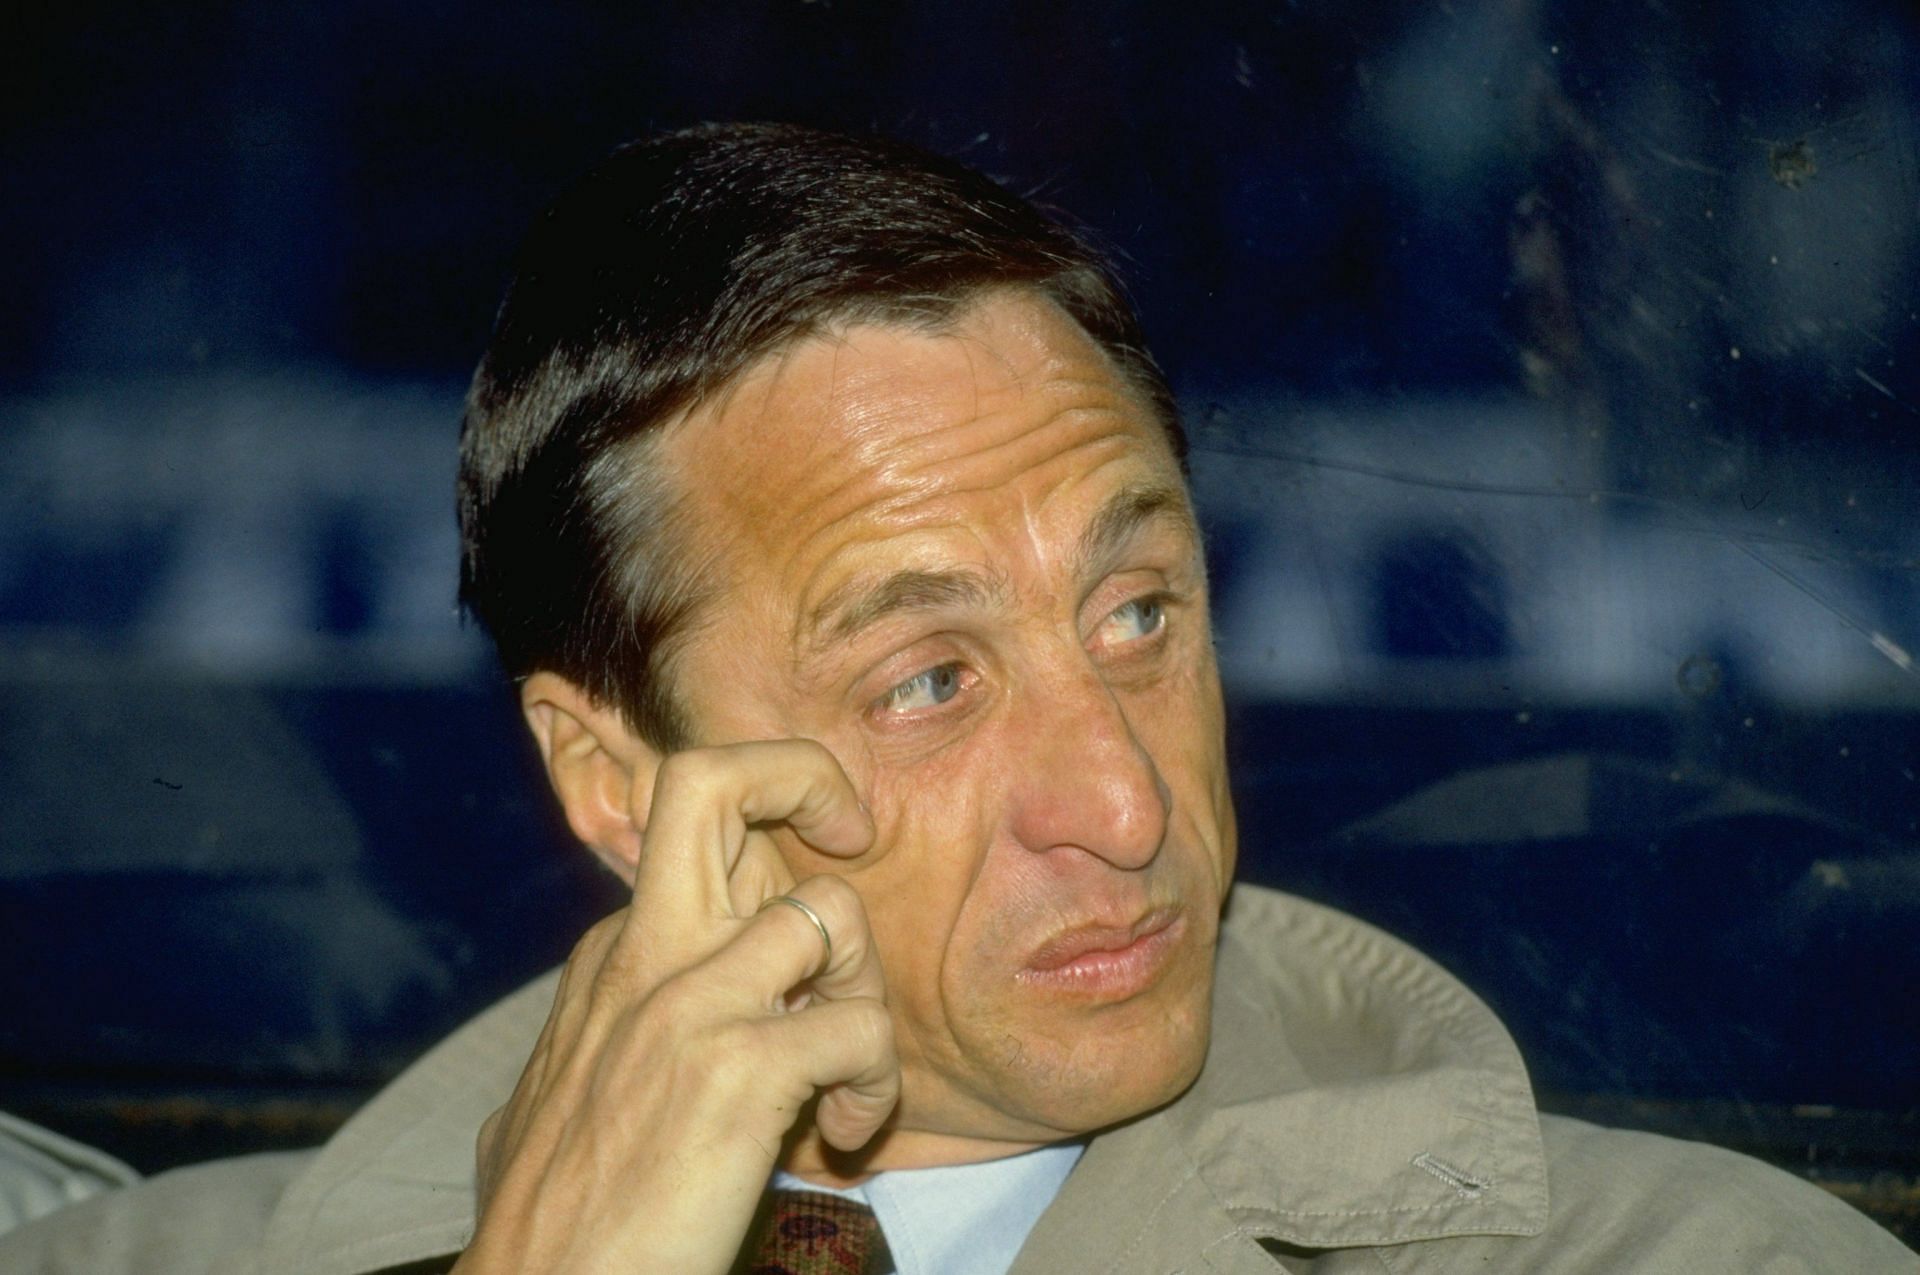 Th legendary Johan Cruyff of Barcelona